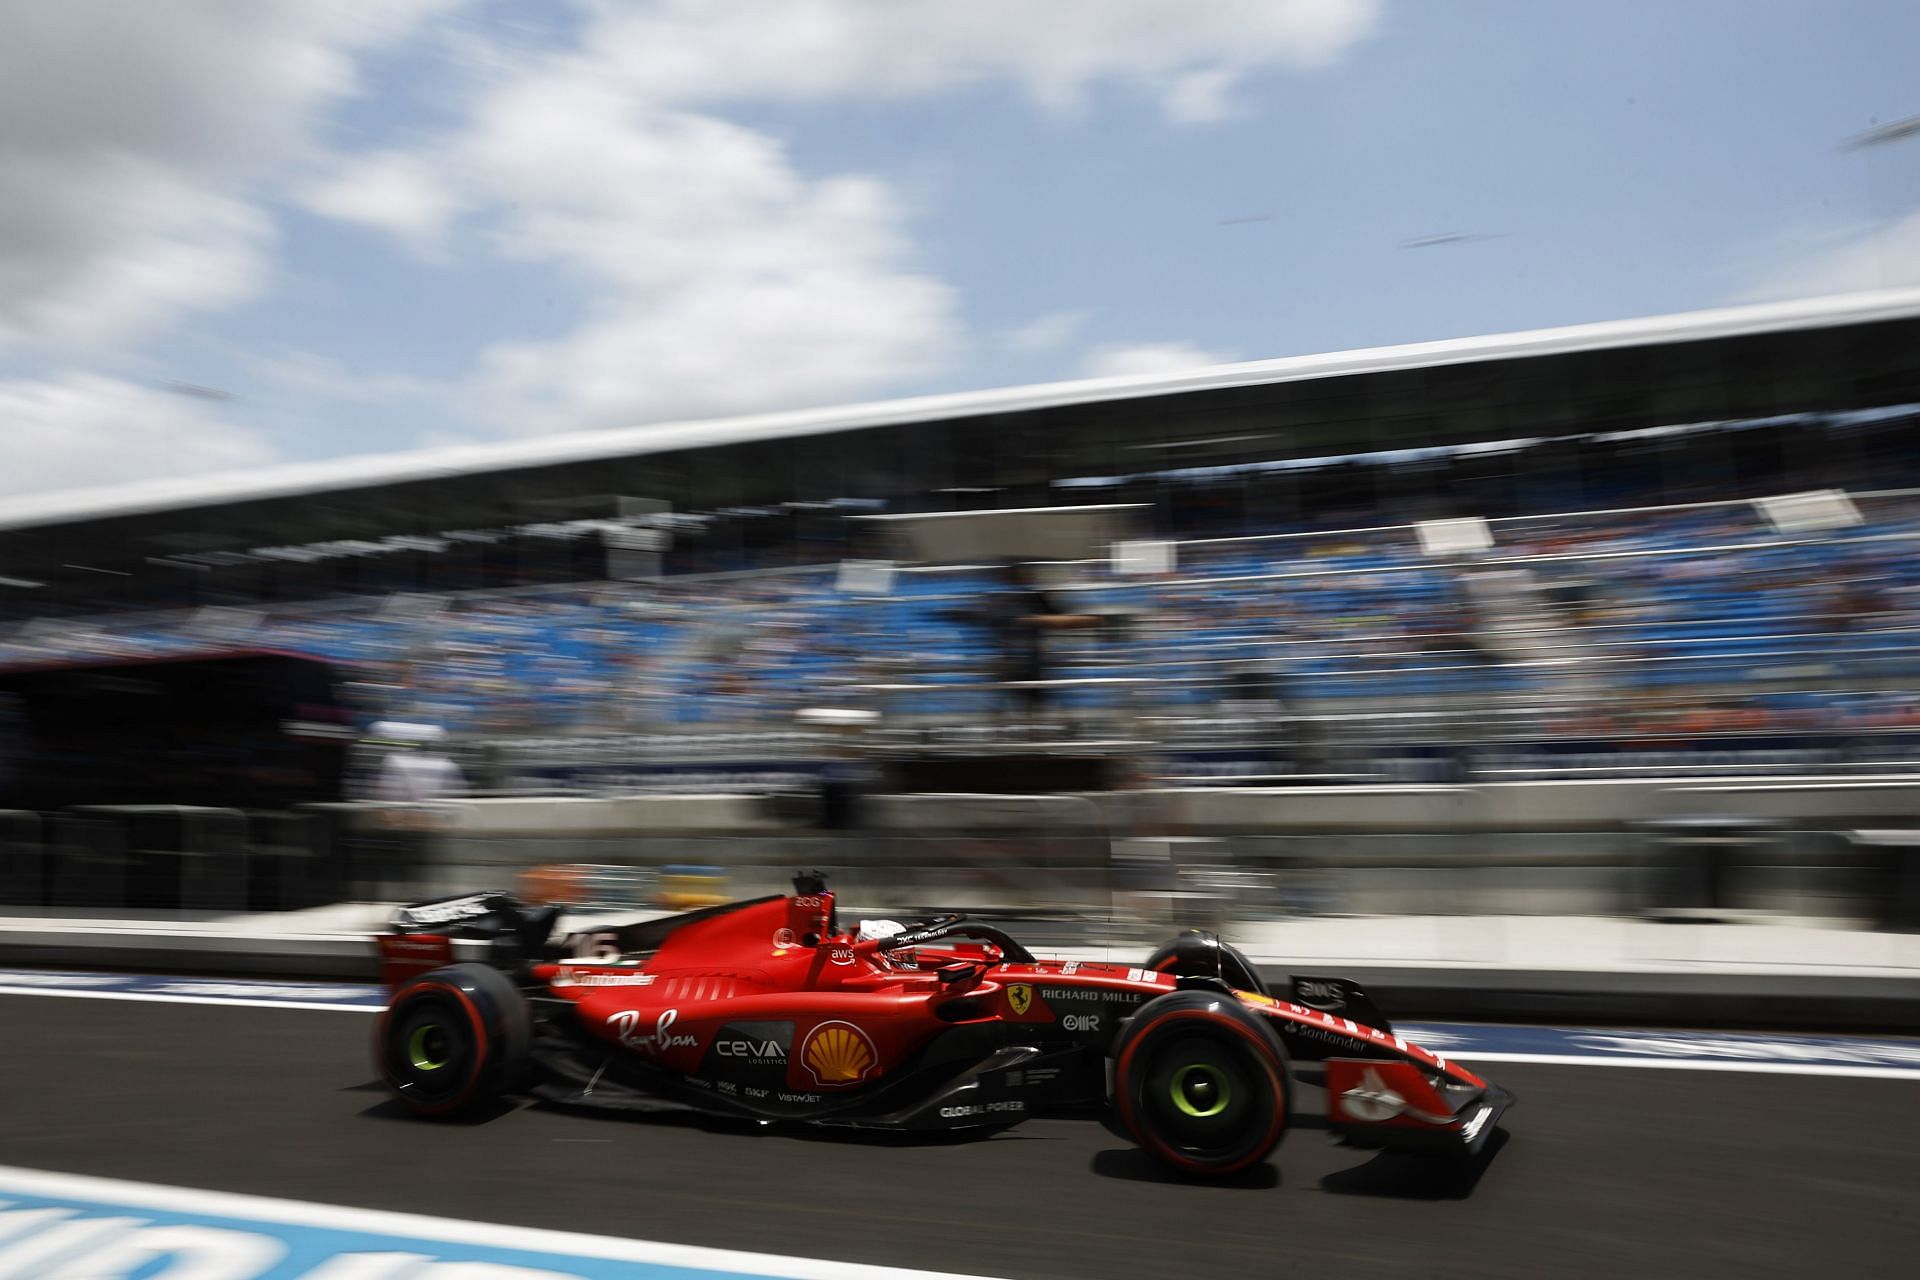 Charles Leclerc in F1 Grand Prix of Miami - Final Practice